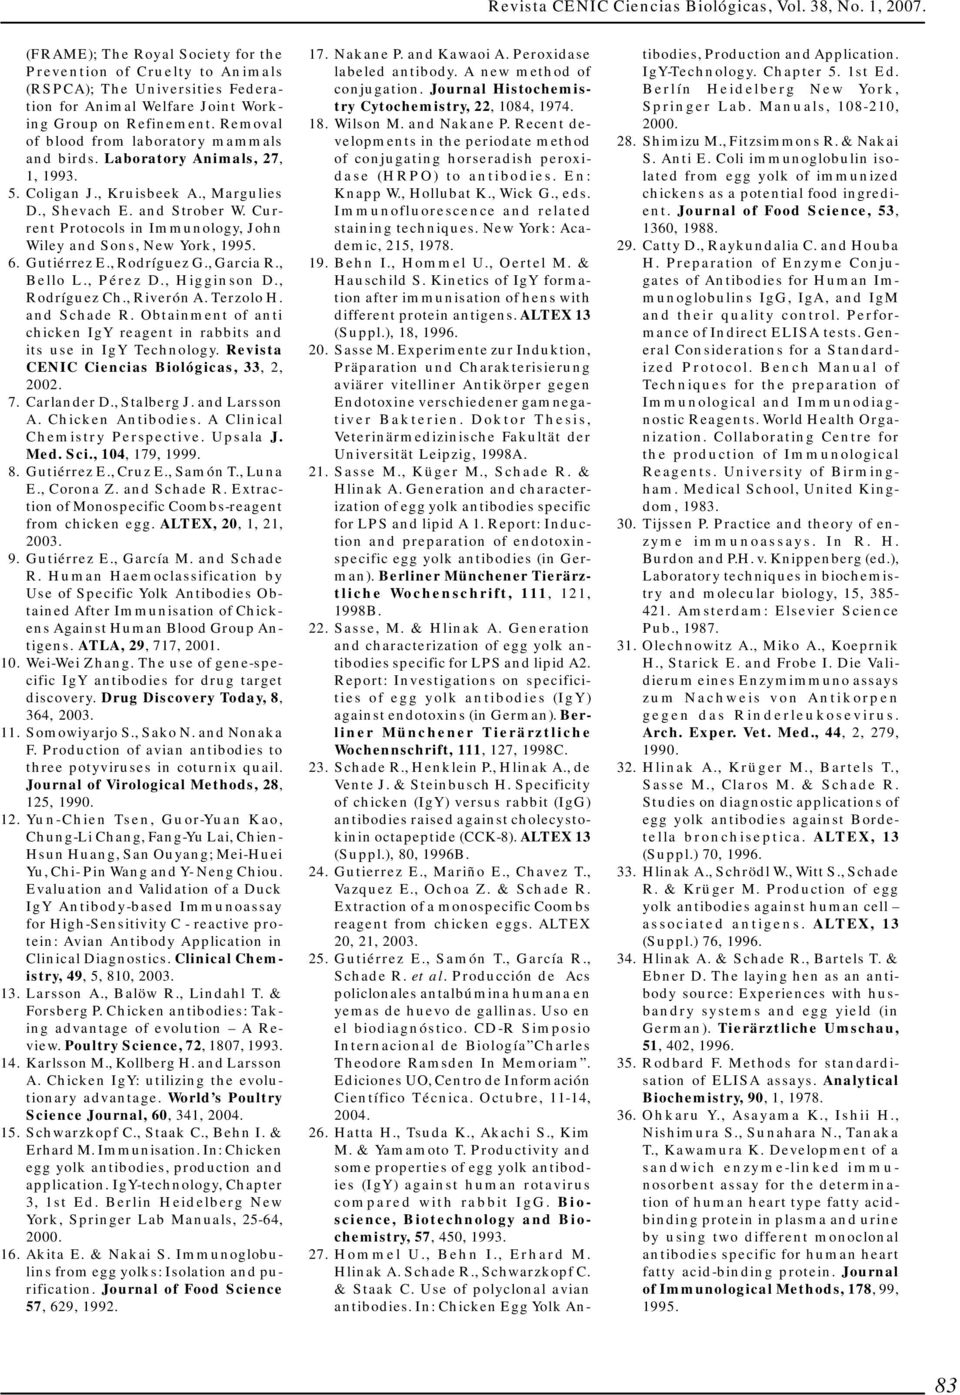 Current Protocols in Immunology, John Wiley and Sons, New York, 199. 6. Gutiérrez E., Rodríguez G., Garcia R., Bello L., Pérez D., Higginson D., Rodríguez Ch., Riverón A. Terzolo H. and Schade R.